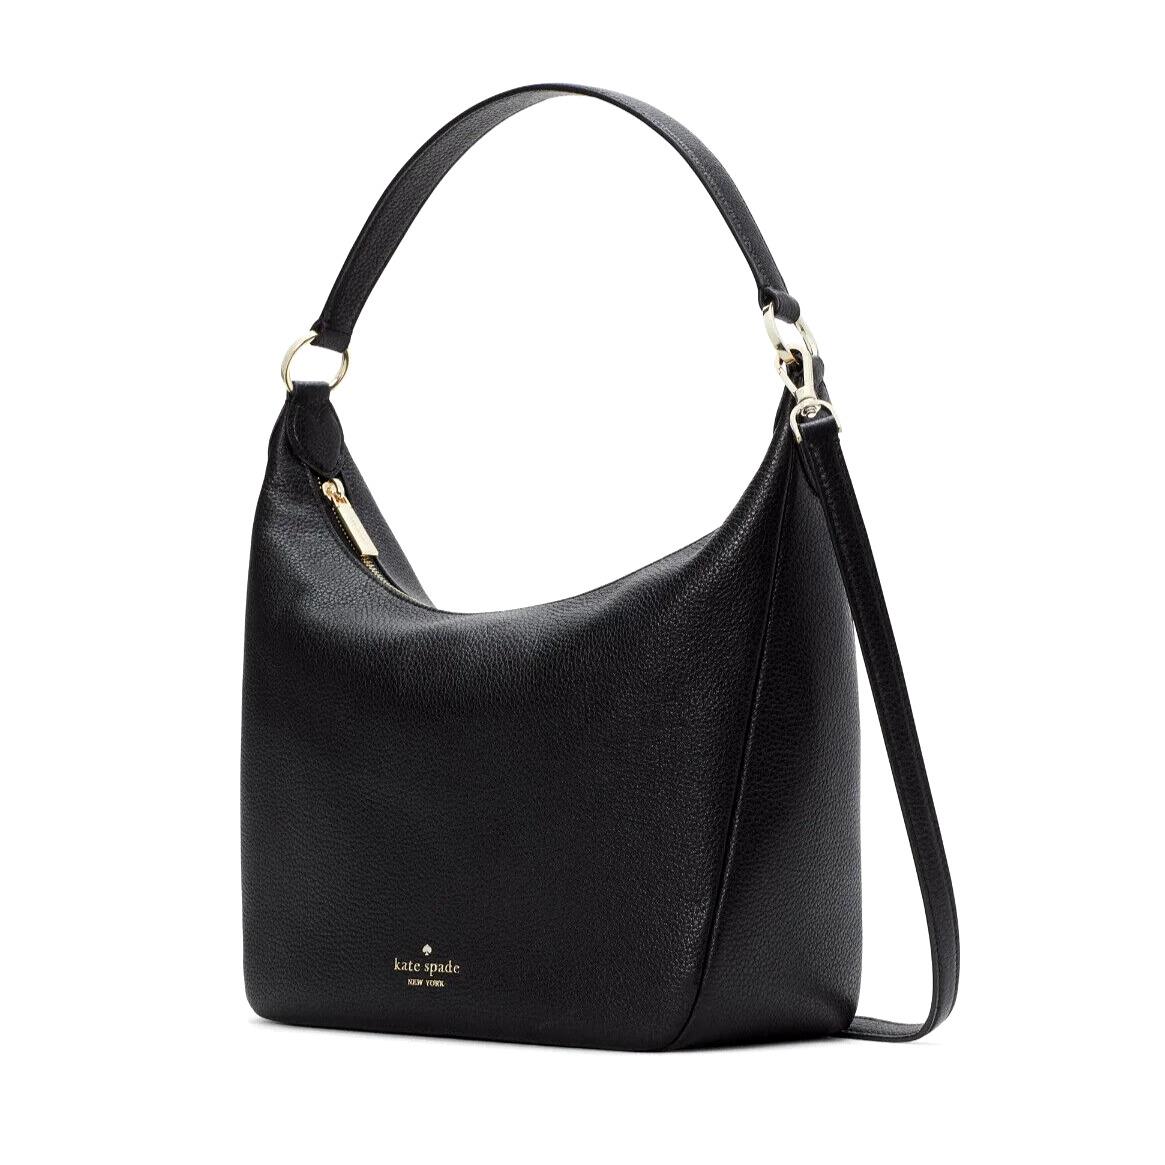 New Kate Spade Leila Hobo Shoulder Bag Pebble Leather Black - Exterior: Black